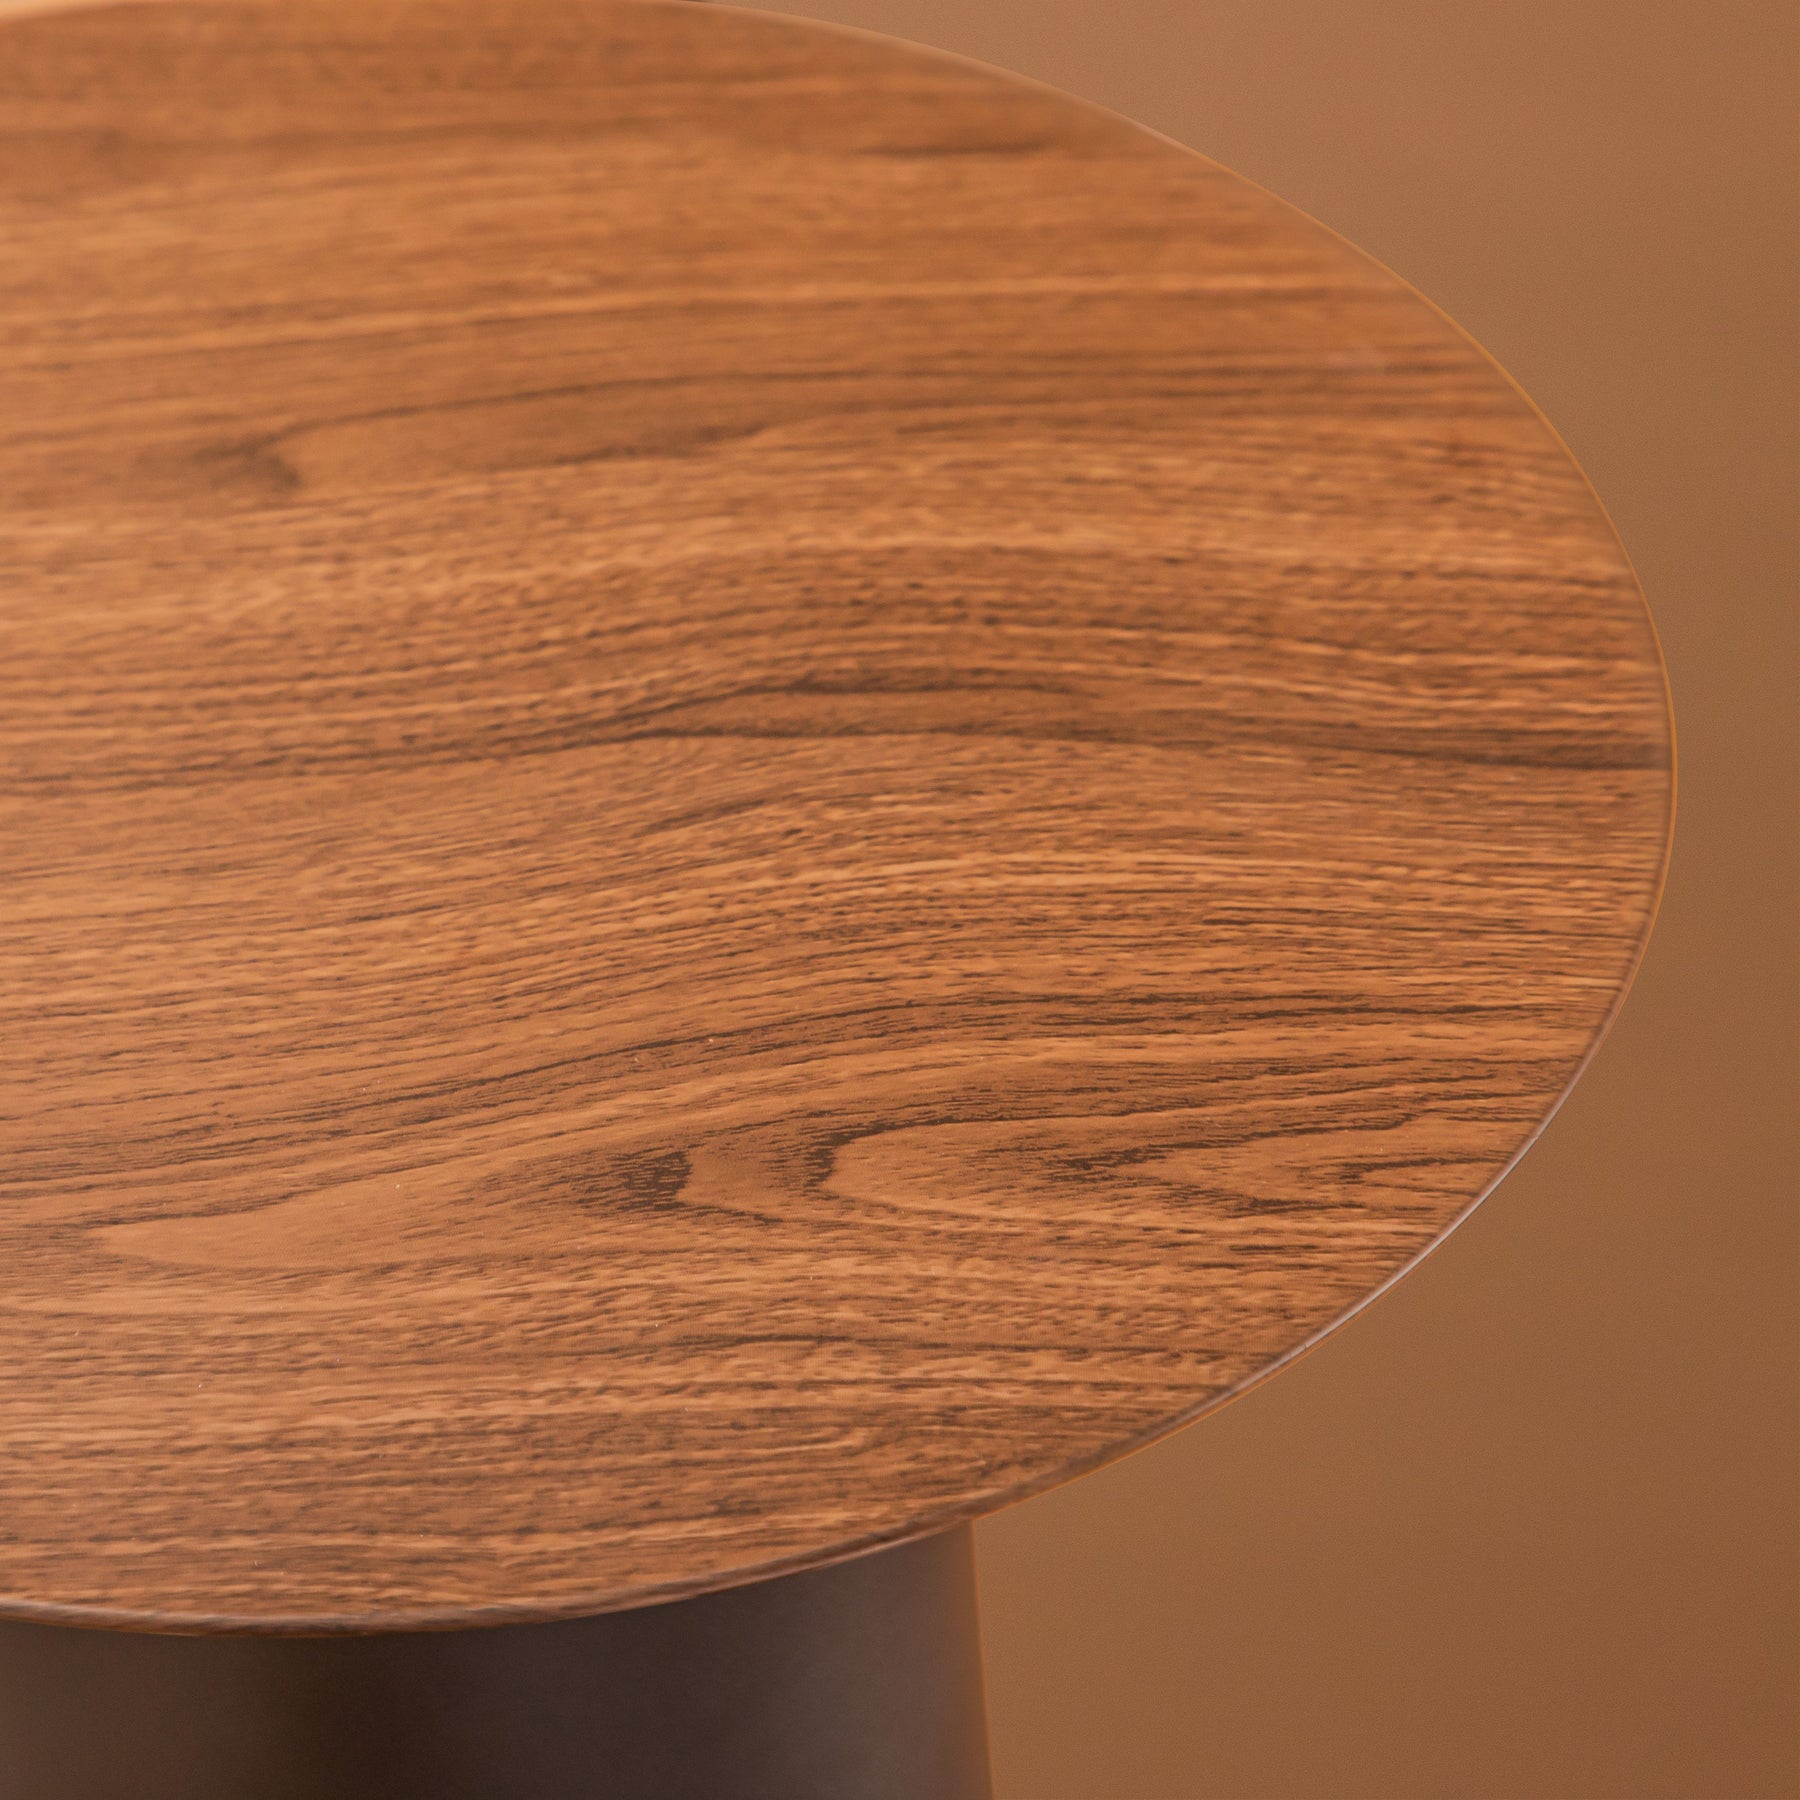 Mid Century Modern Metal Single Round Coffee Table -Walnut veneer 17.7"W